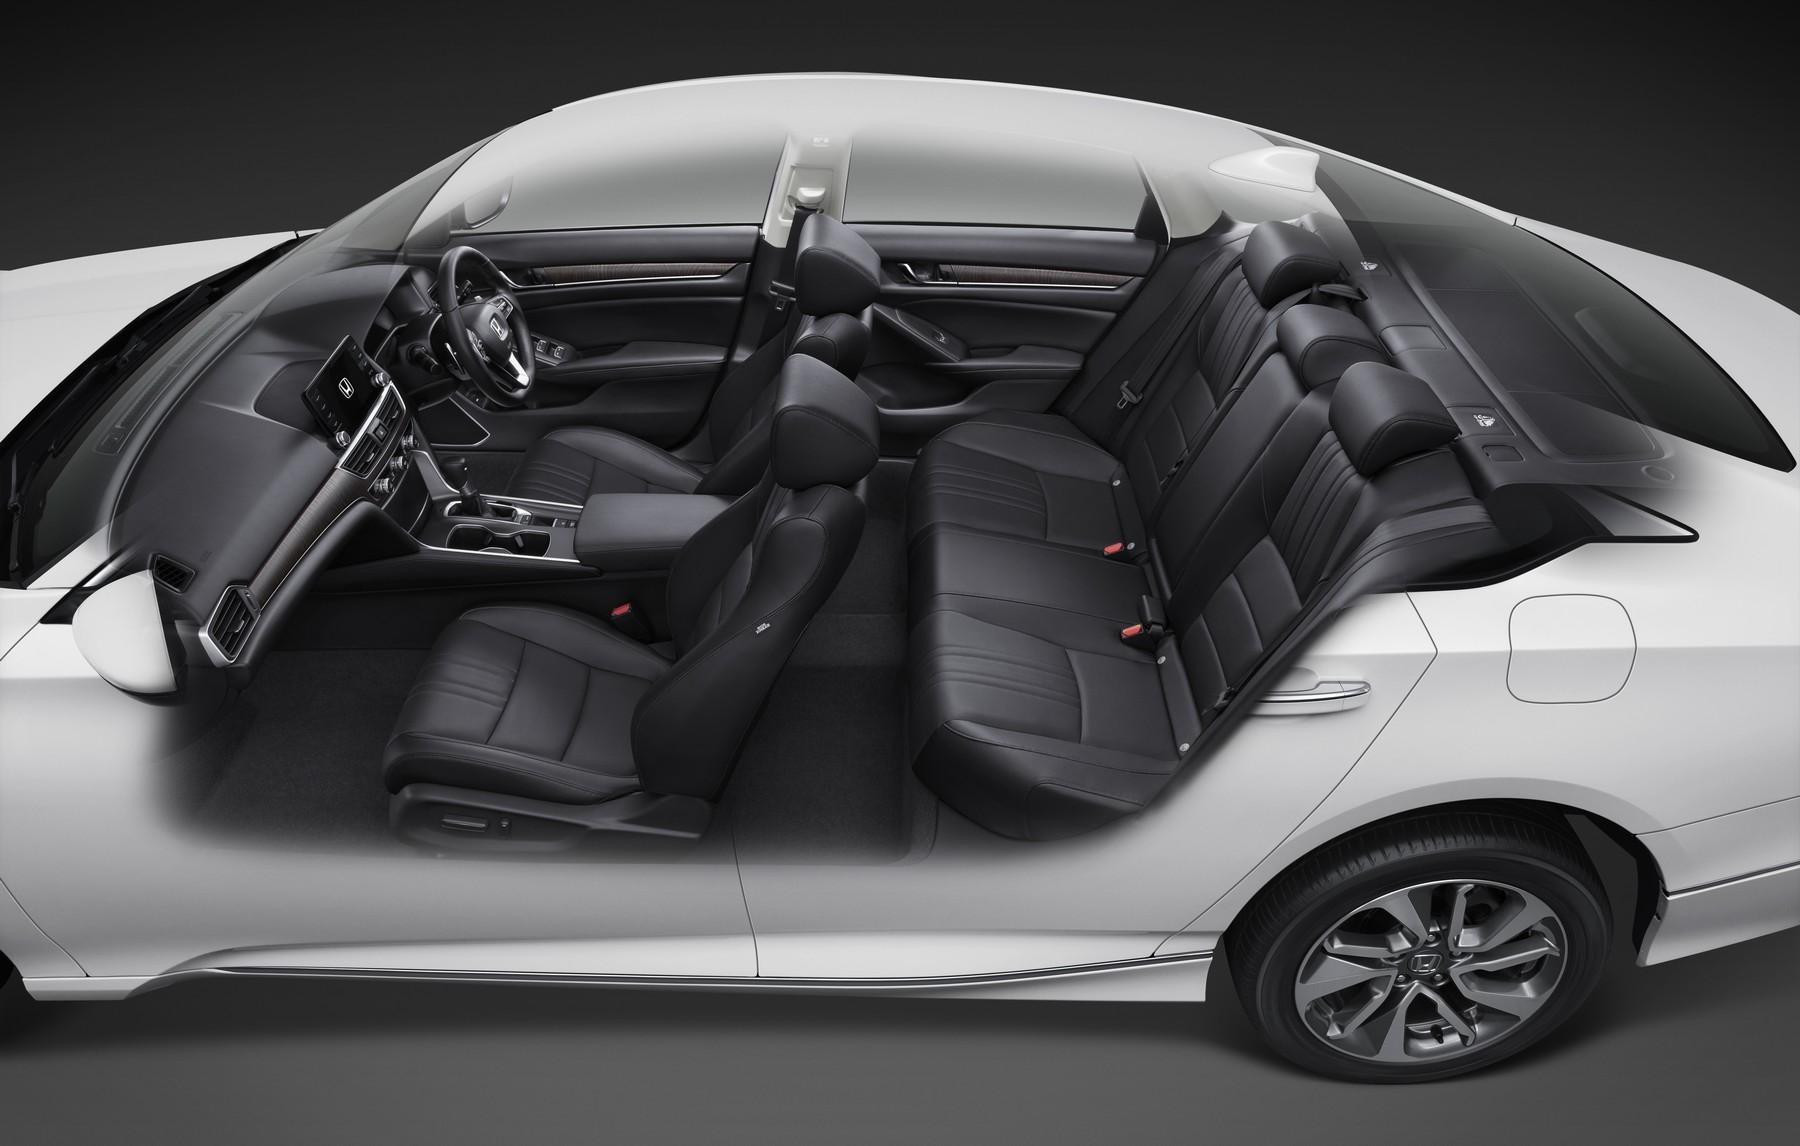 Honda Accord Hybrid ใหม่ สปอร์ตซีดานสุดพรีเมียม เตรียมส่ง 3 รุ่นกับที่สุดแห่งความเร้าใจ